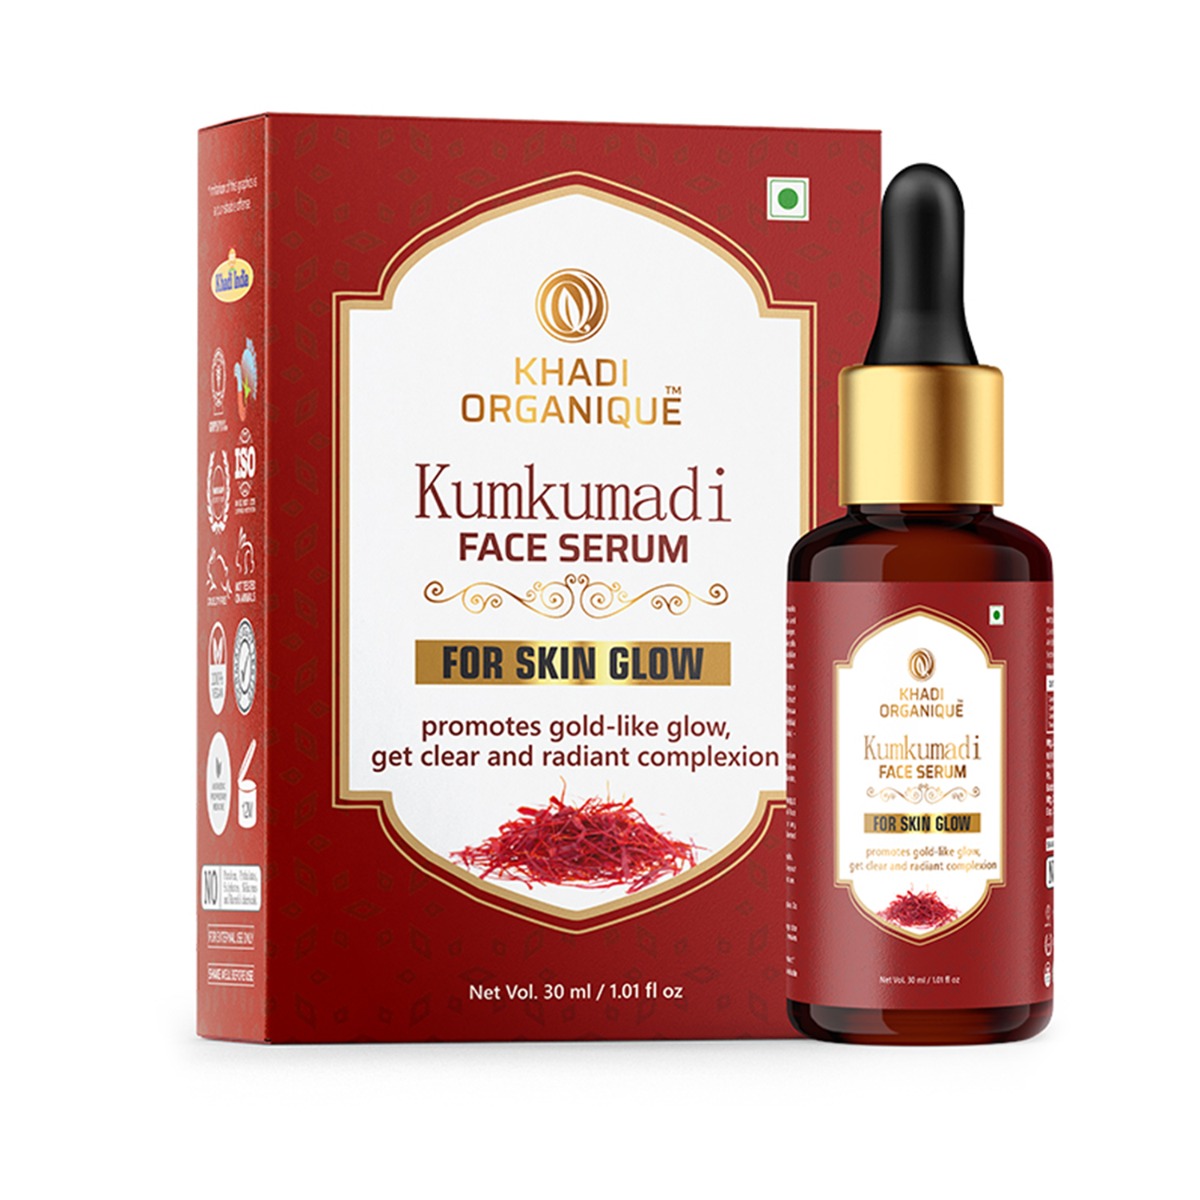 Khadi Organique Kumkumadi Face Serum For Skin Glow, 30ml